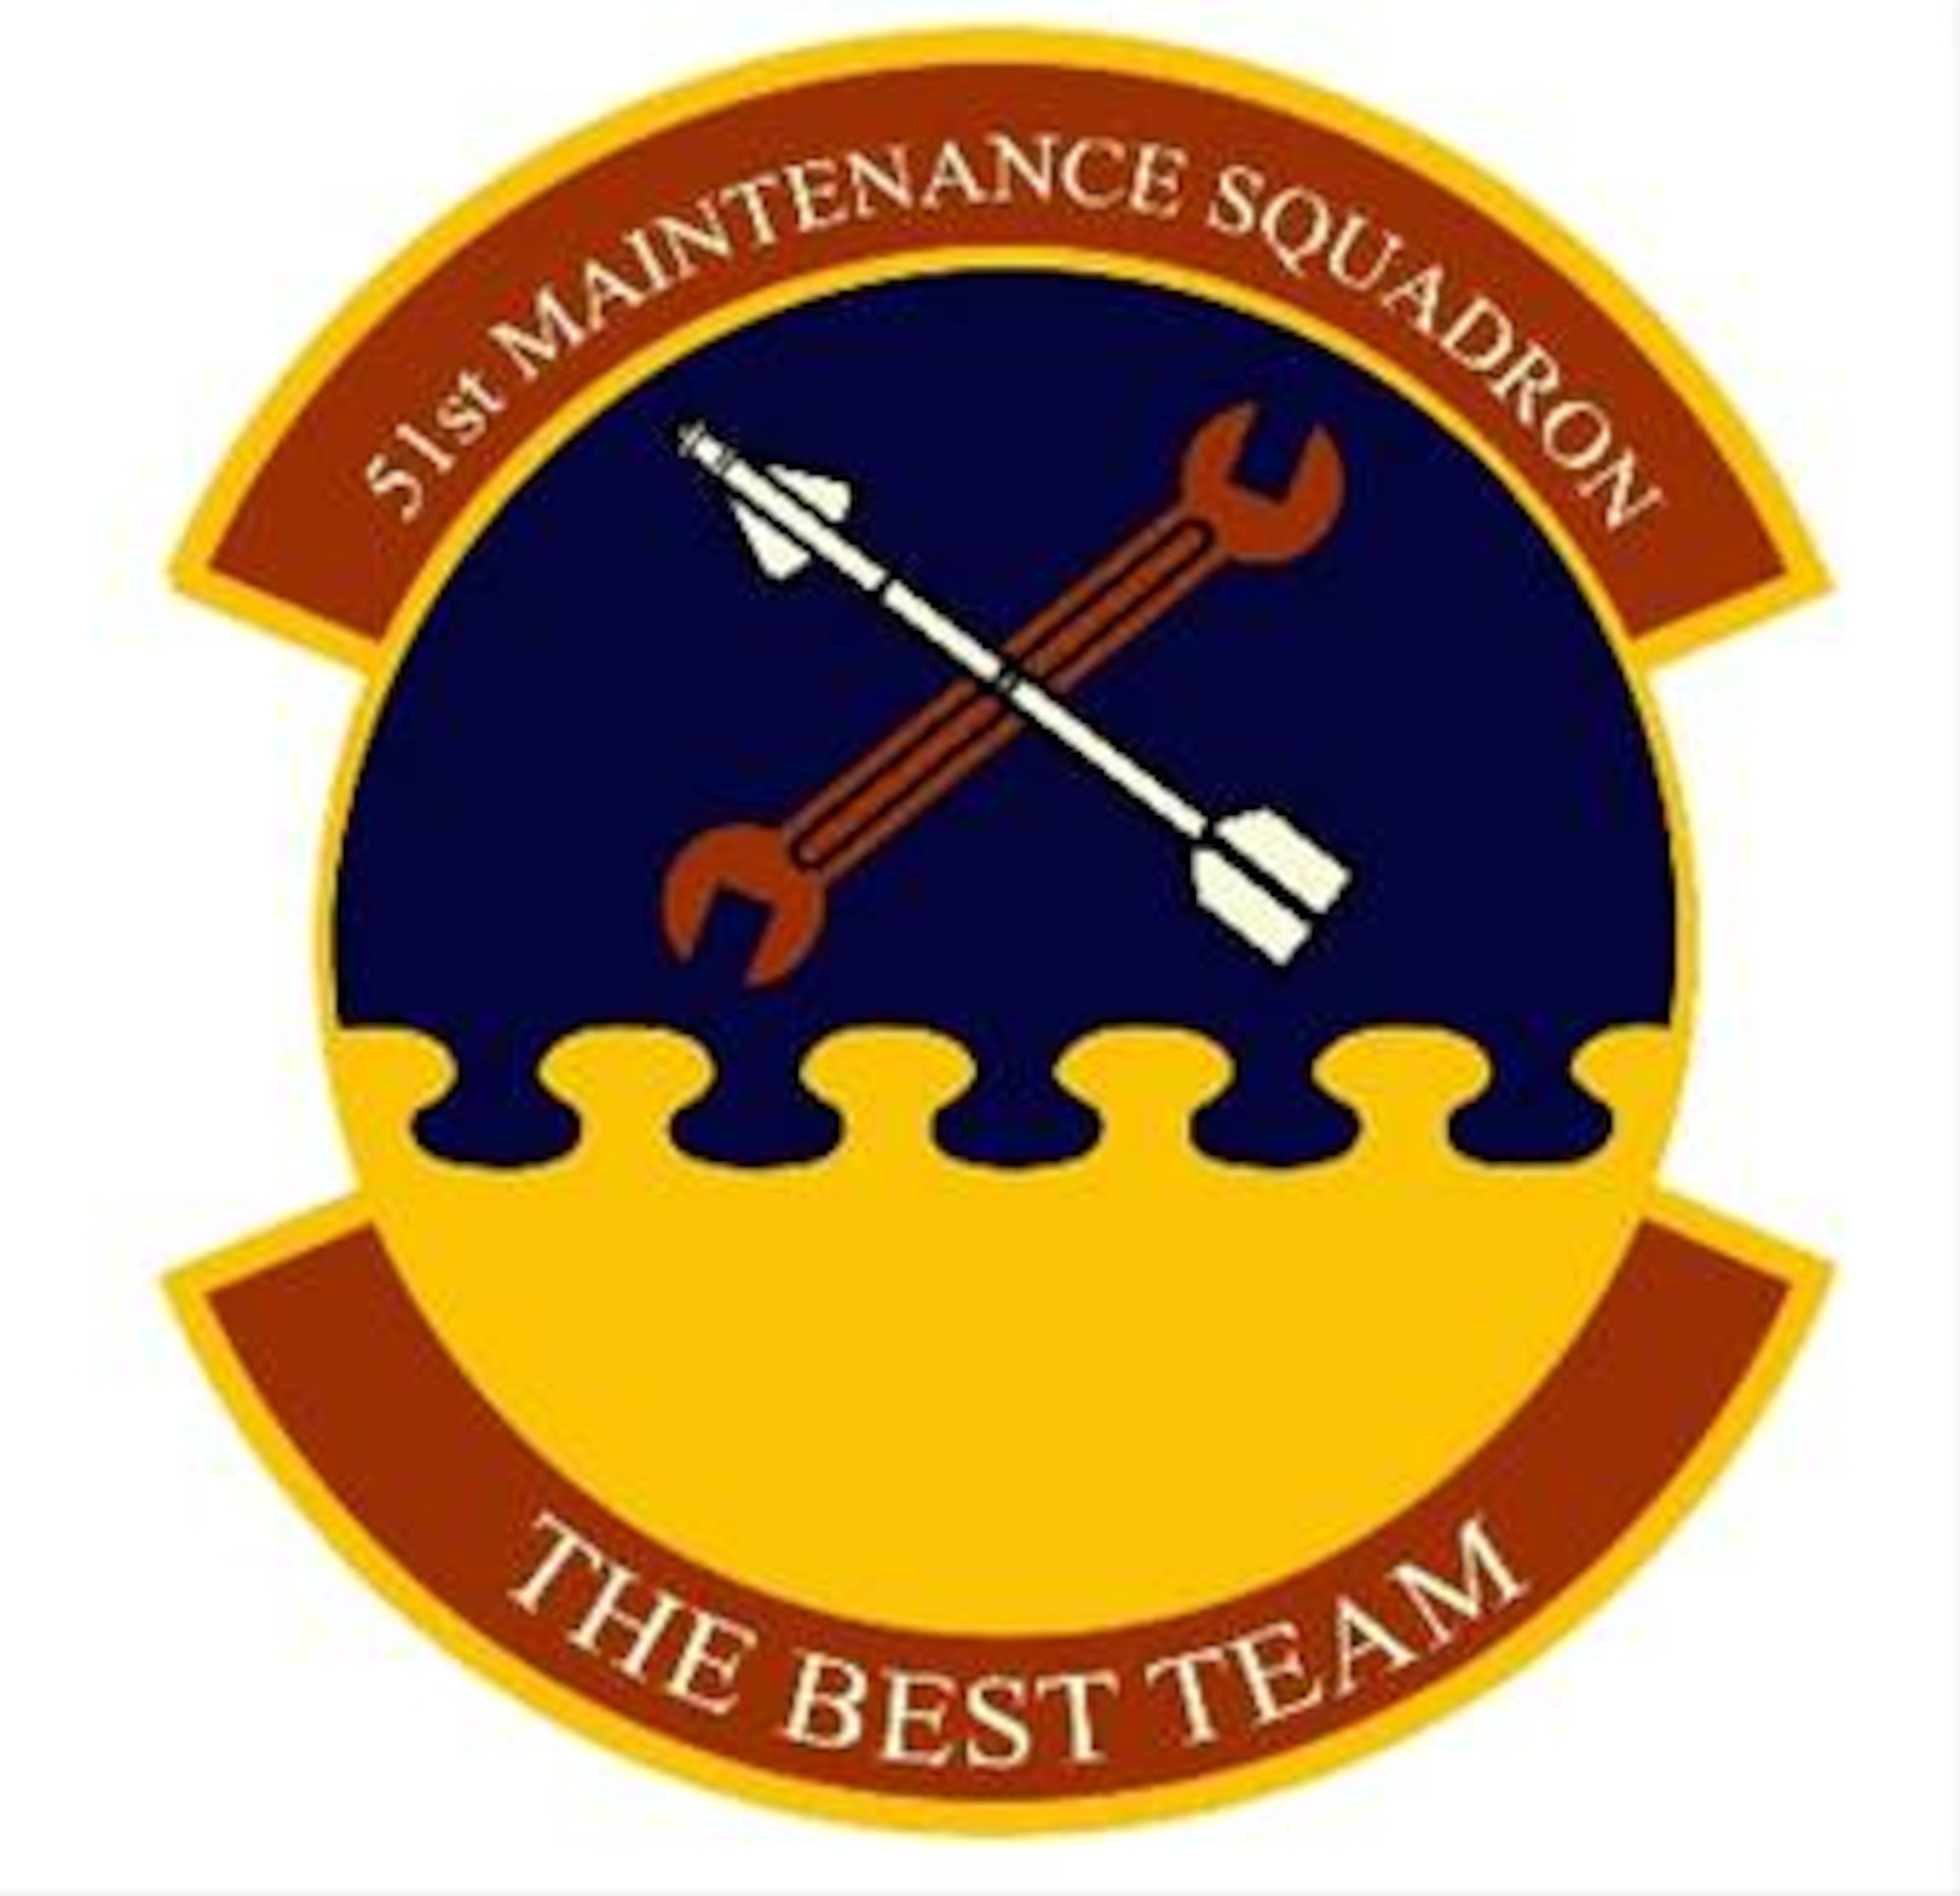 51st Maintenance Squadron heraldic emblem